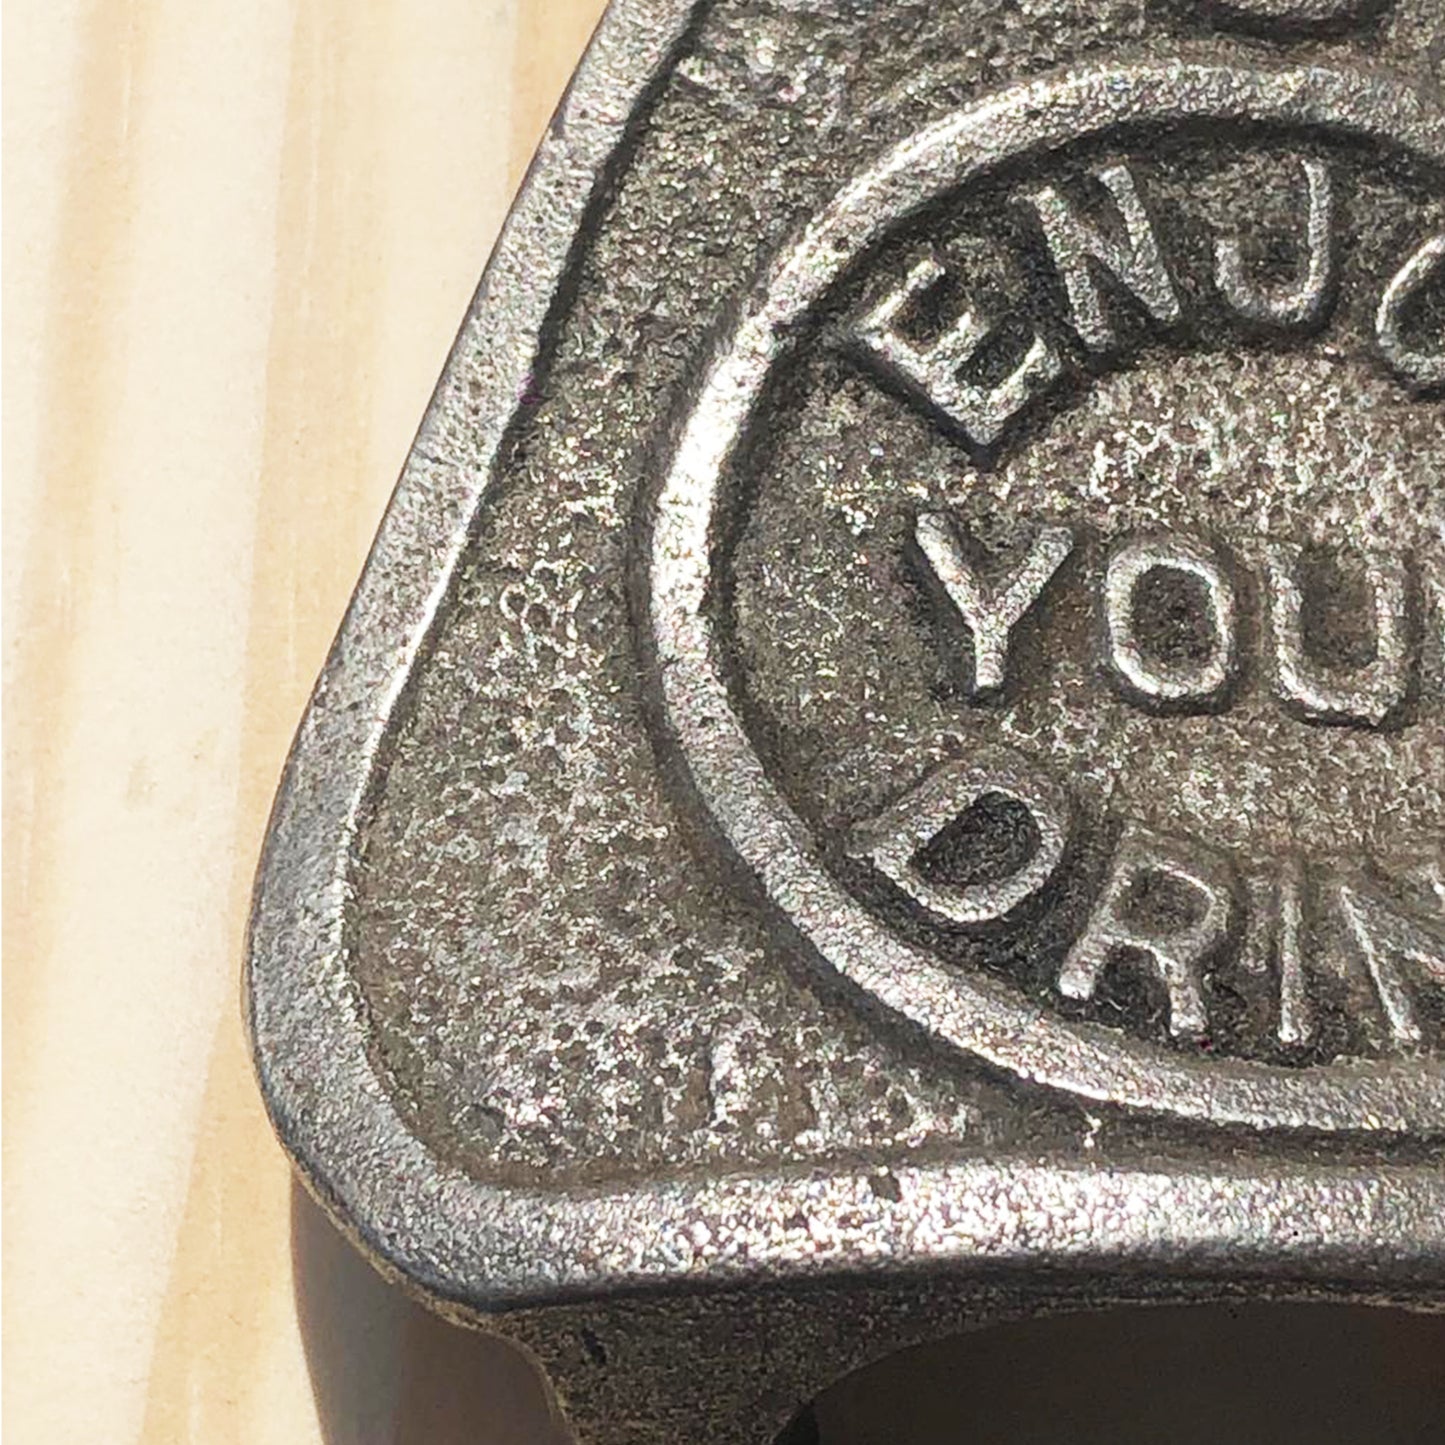 Enjoy Drink Cast Iron Bottle Opener on Personalised Wood Plaque